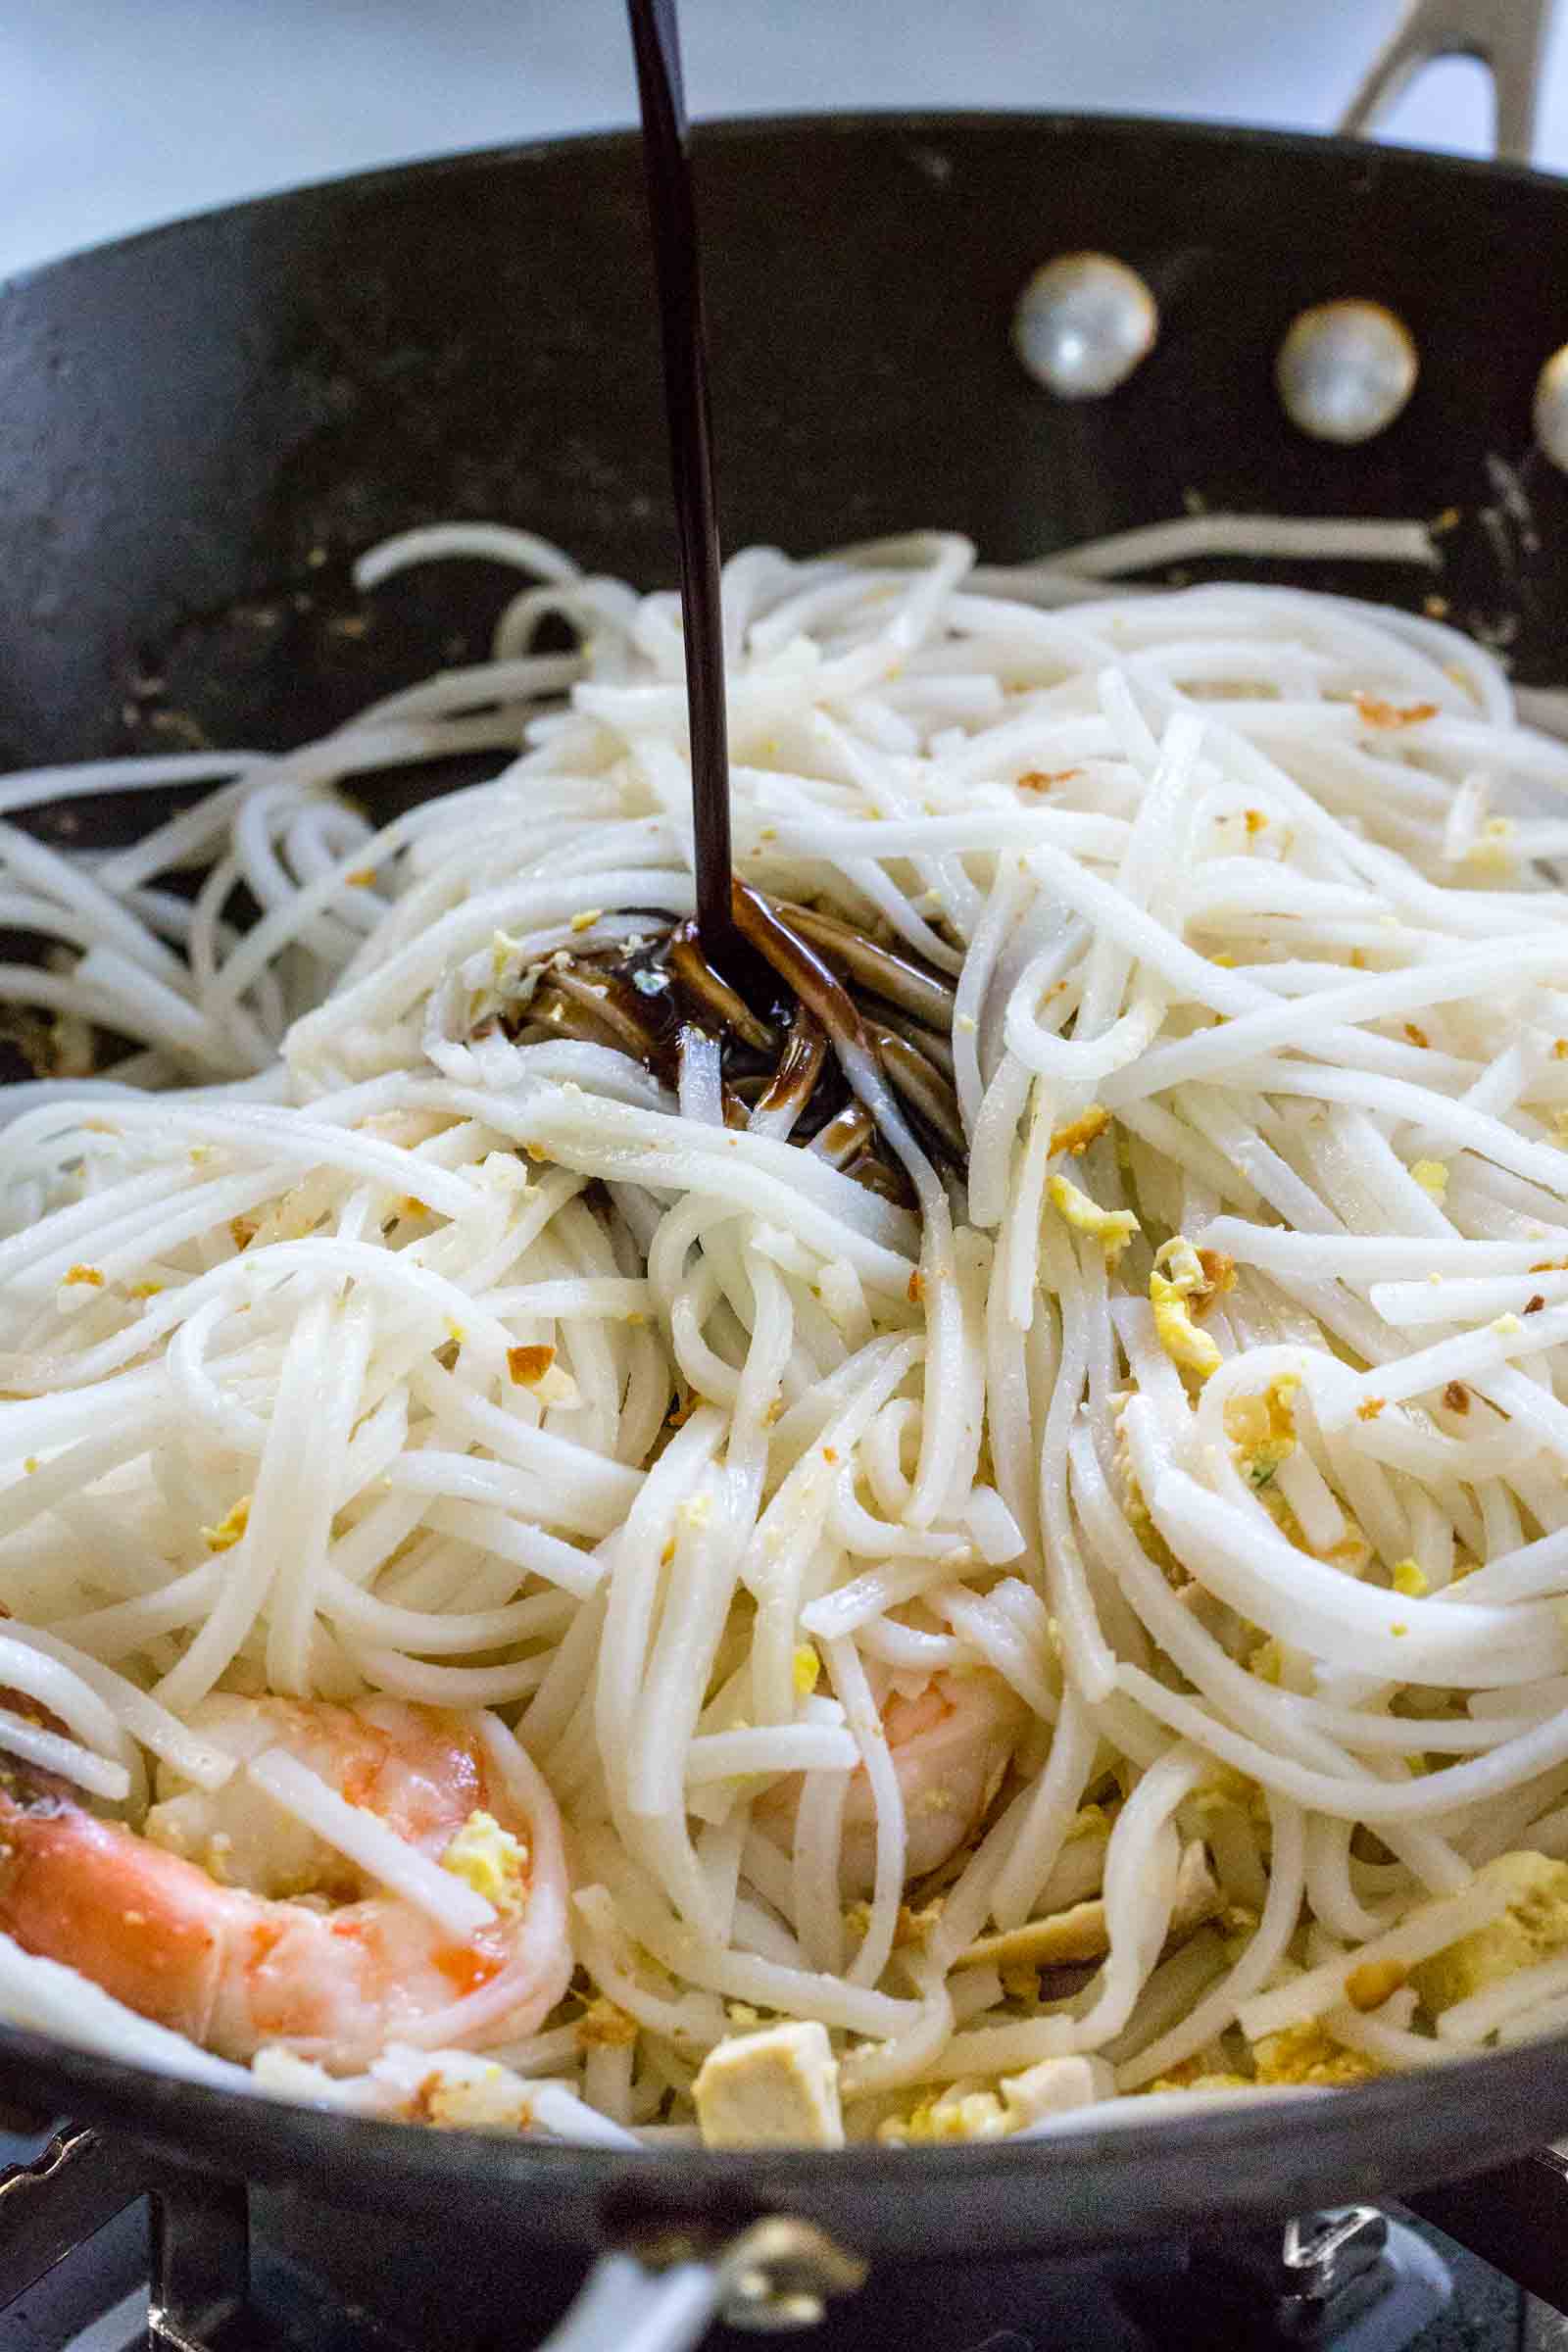 Pad thai sauce poured over noodles